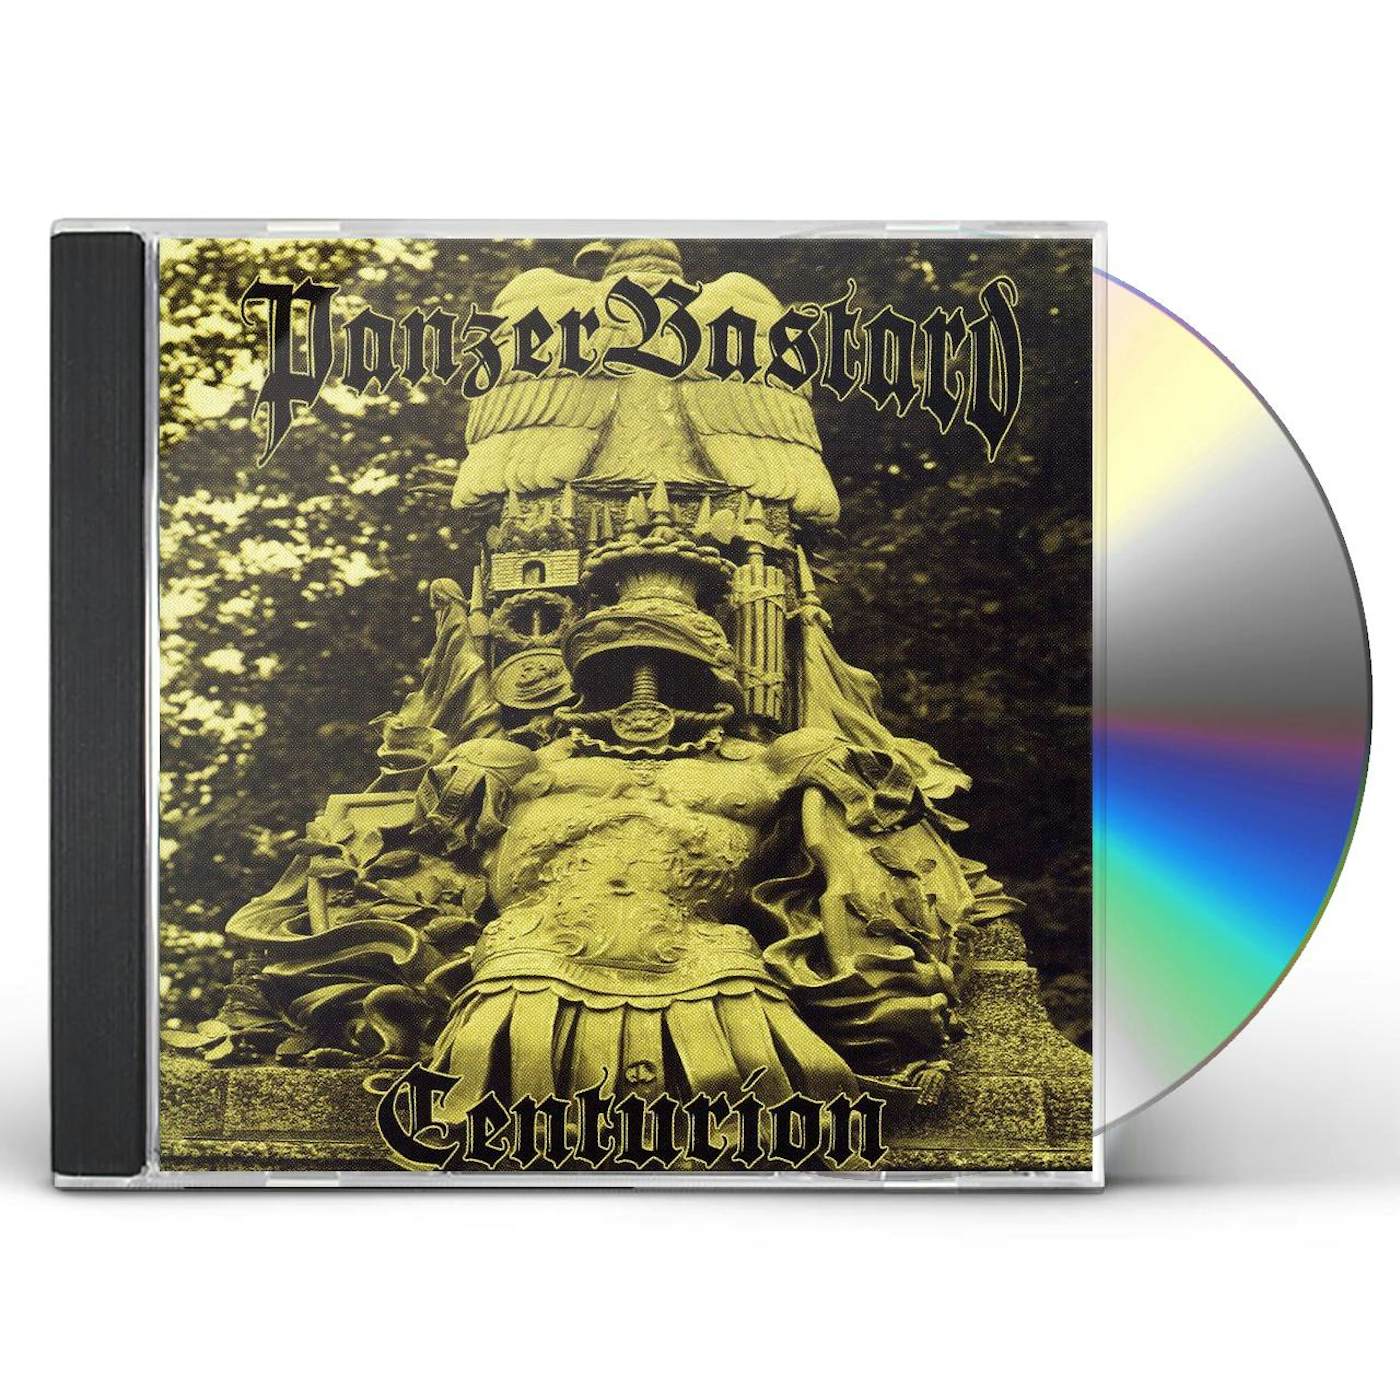 PanzerBastard CENTURION CD